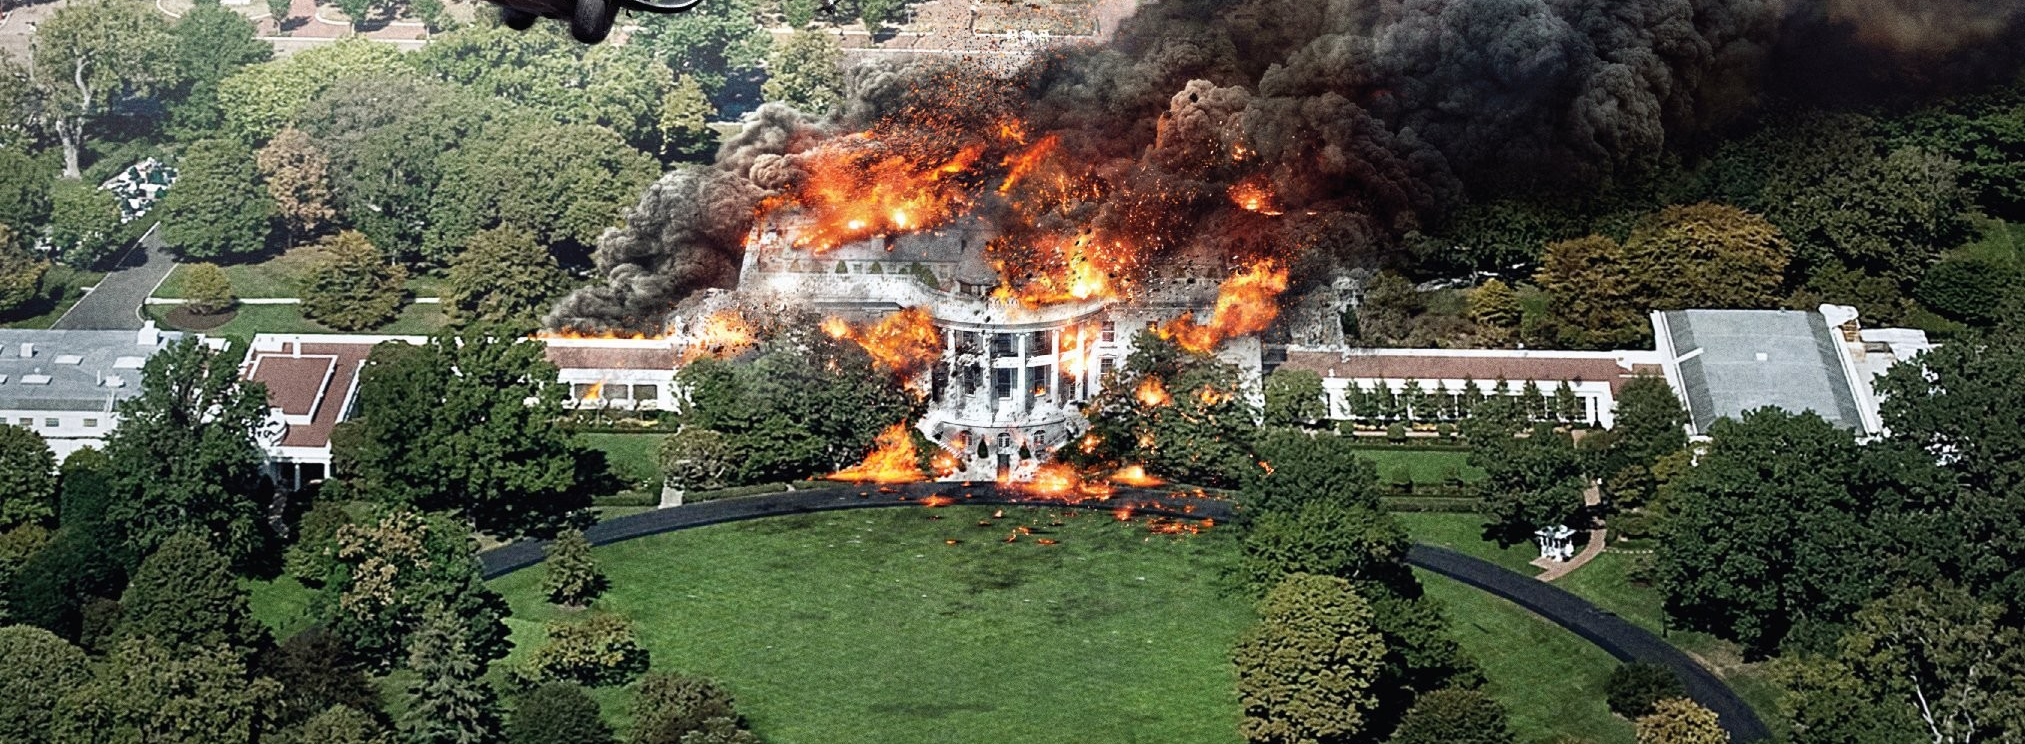 White House Down Burning